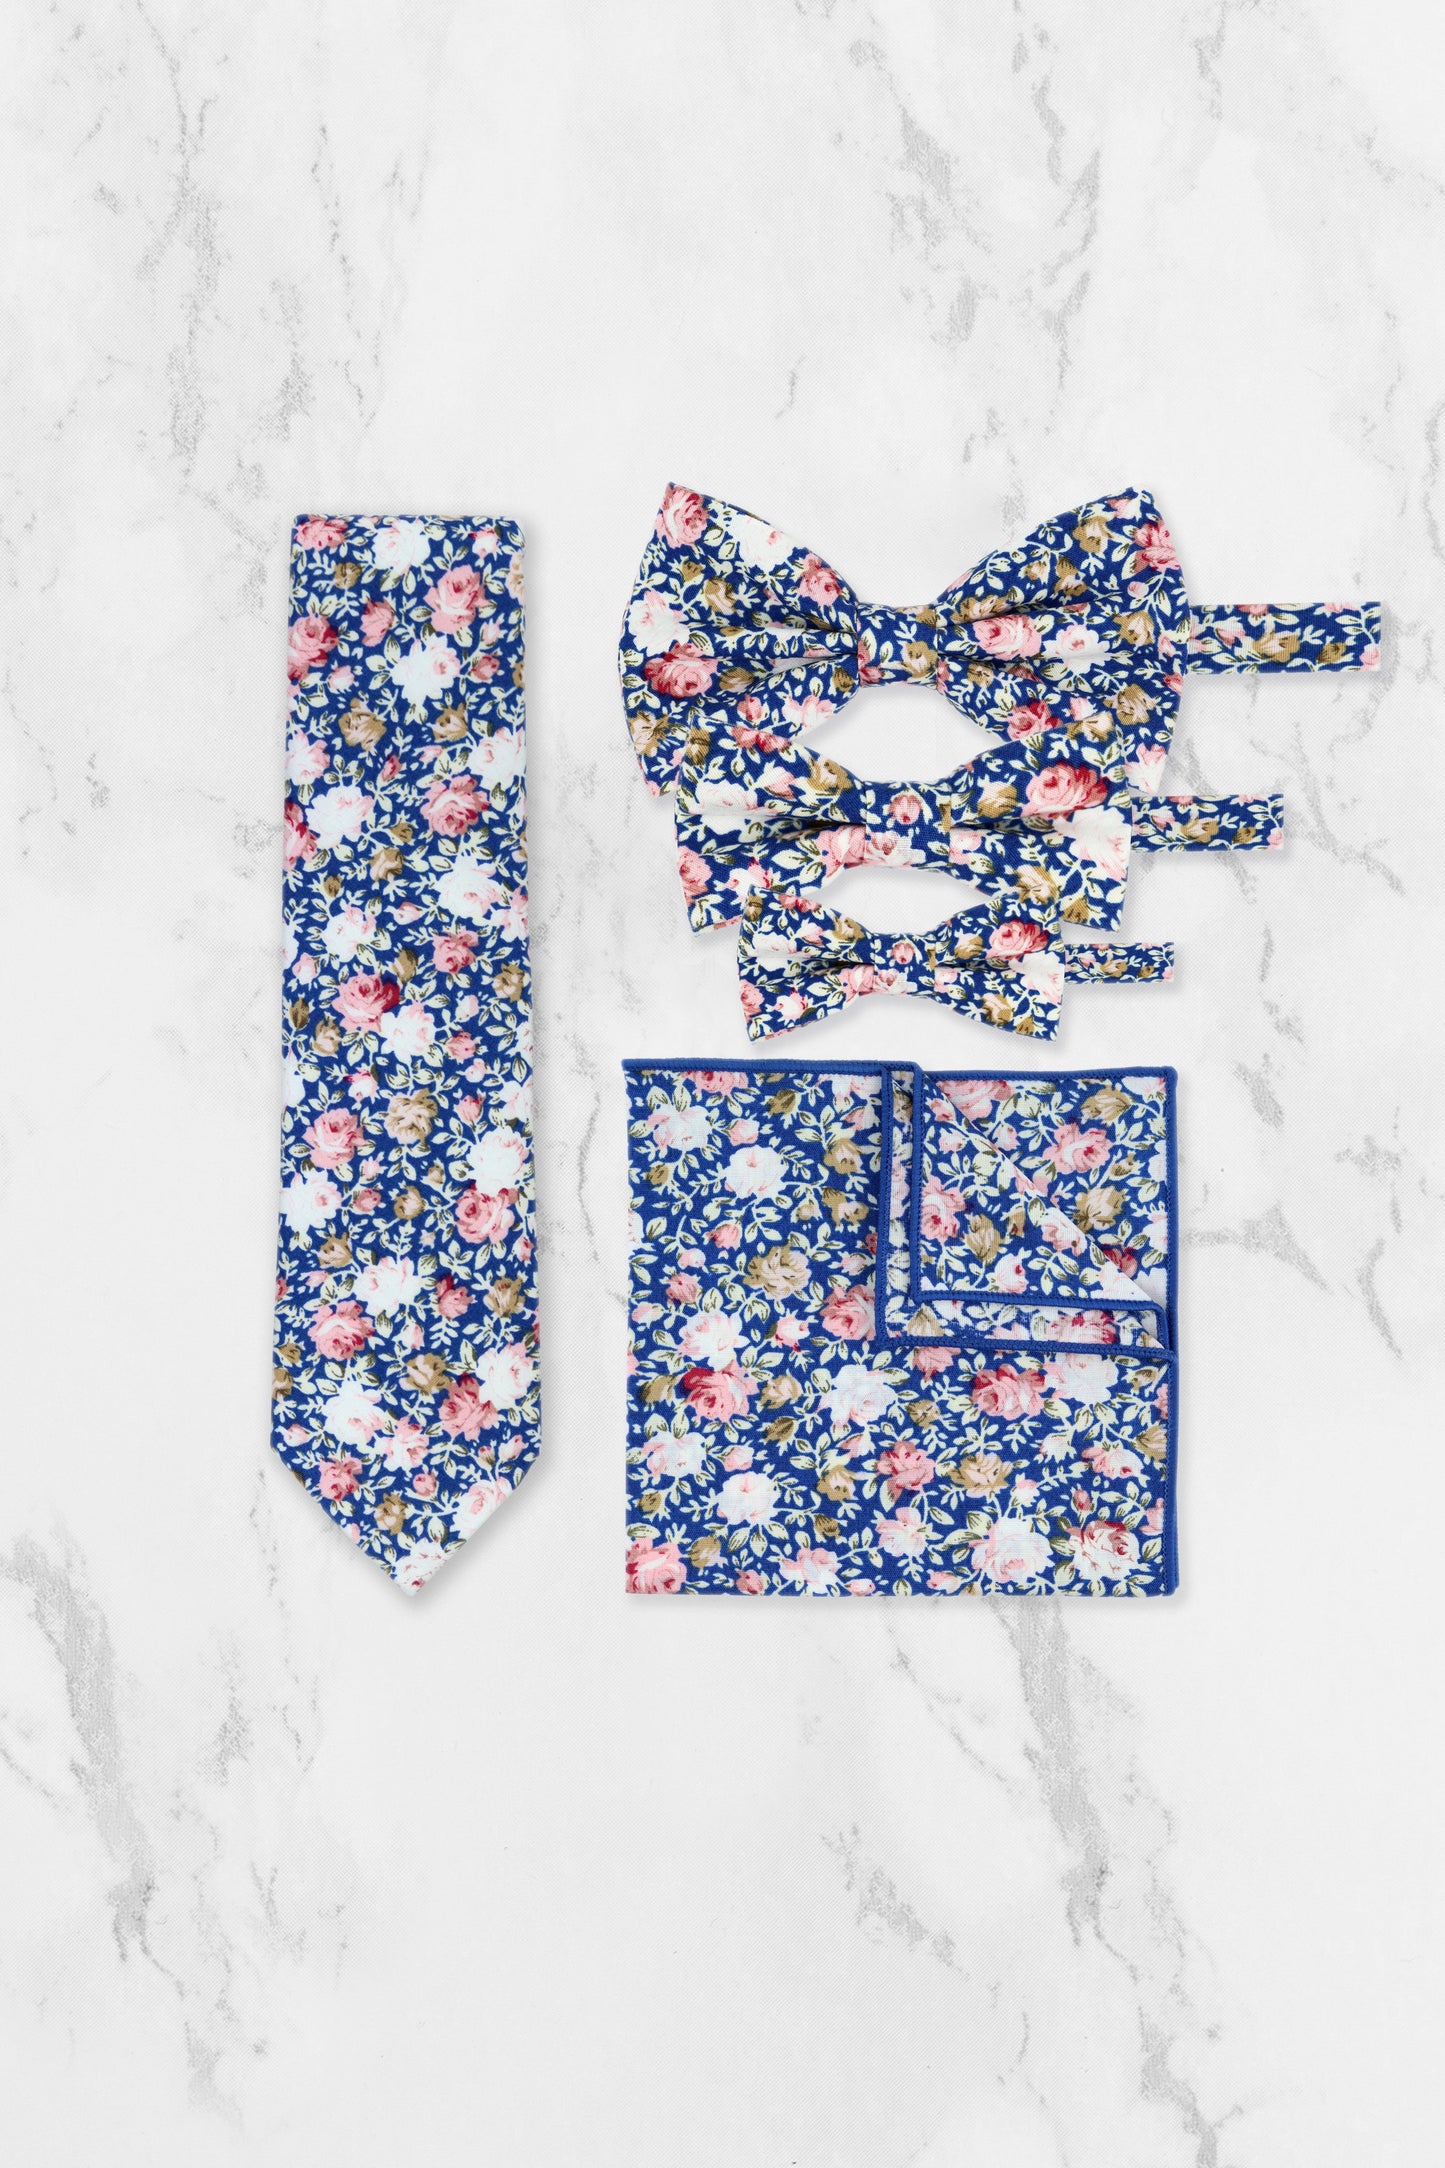 100% Cotton Floral Print Bow Tie - Blue & Pink